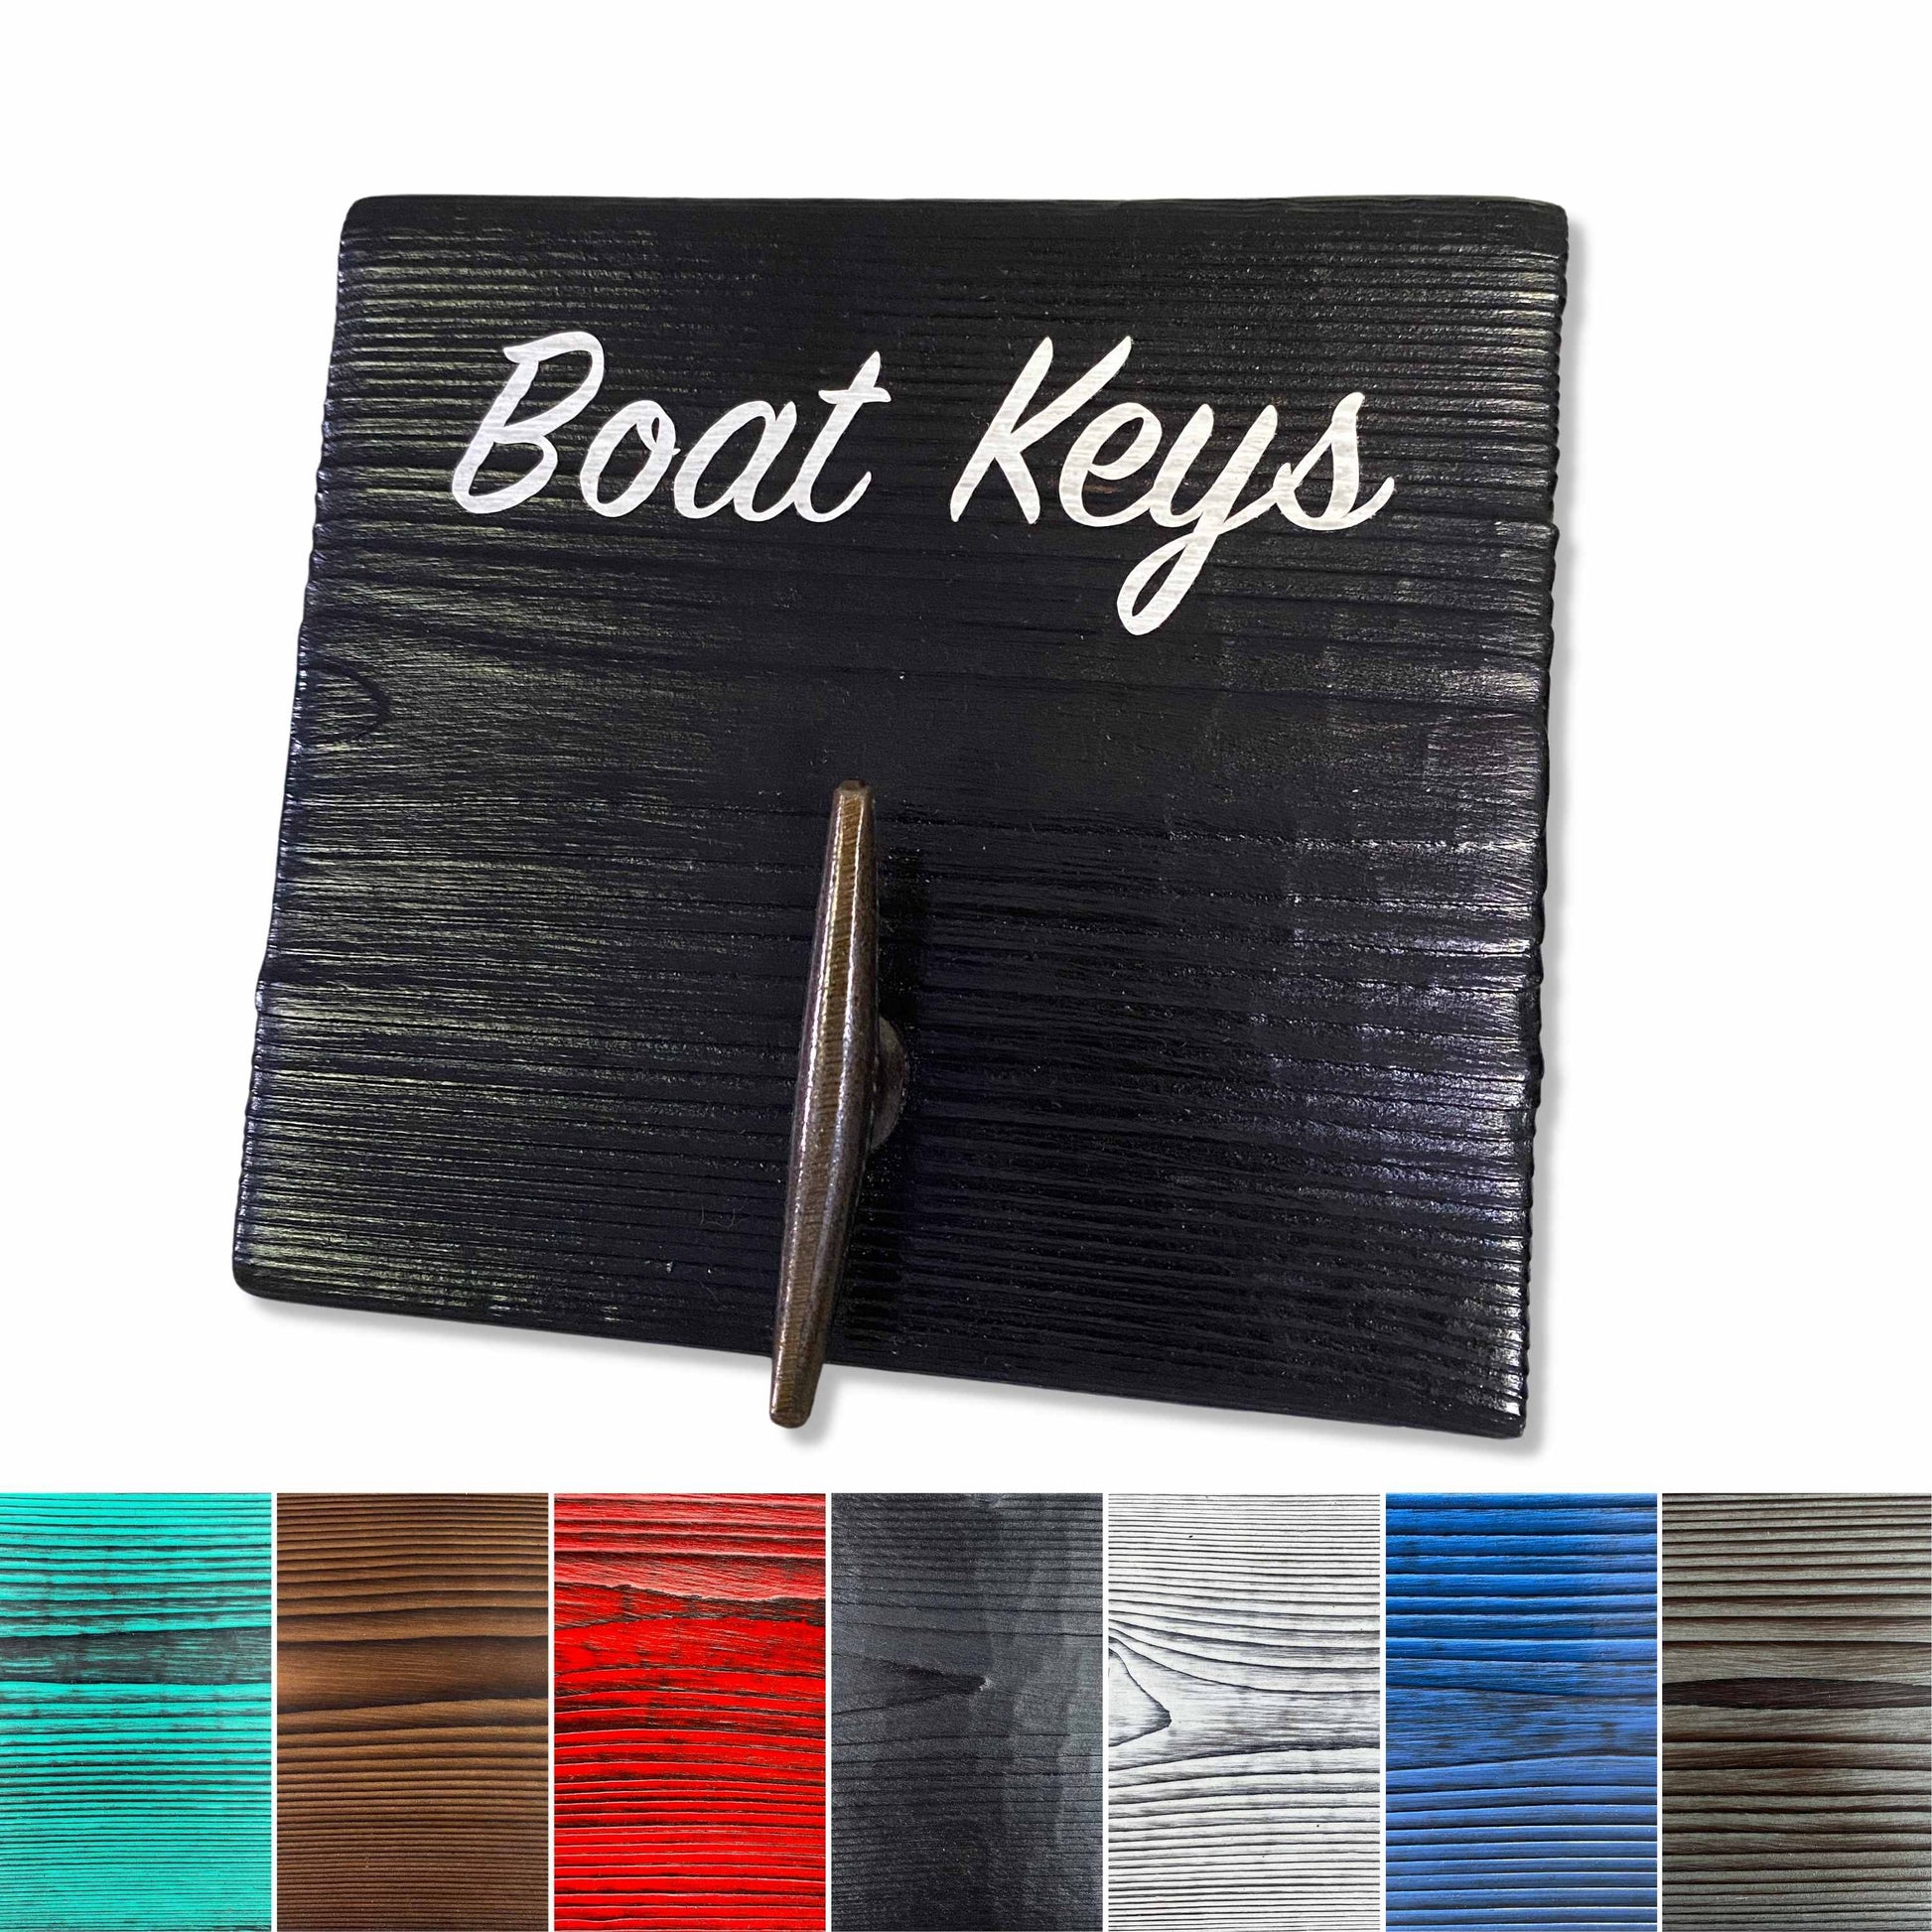 Boat Key Holder in Black with White Lettering - Key Rack for Boat Keys 